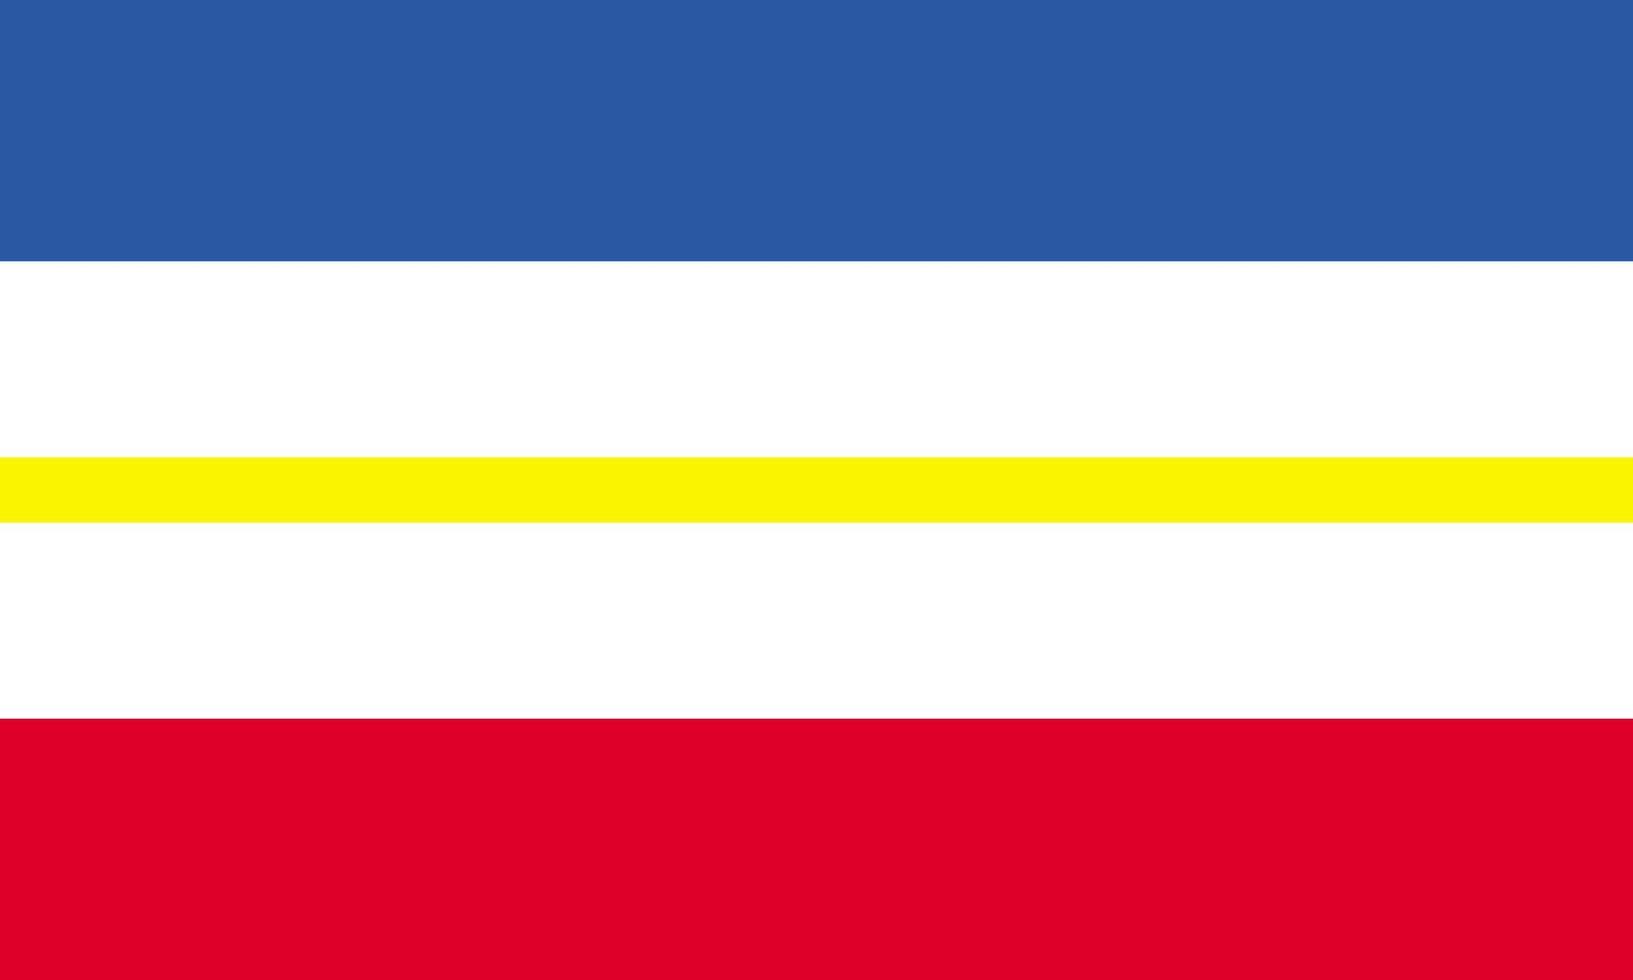 mecklenburg-vorpommern vlag, staat van duitsland. vector illustratie.